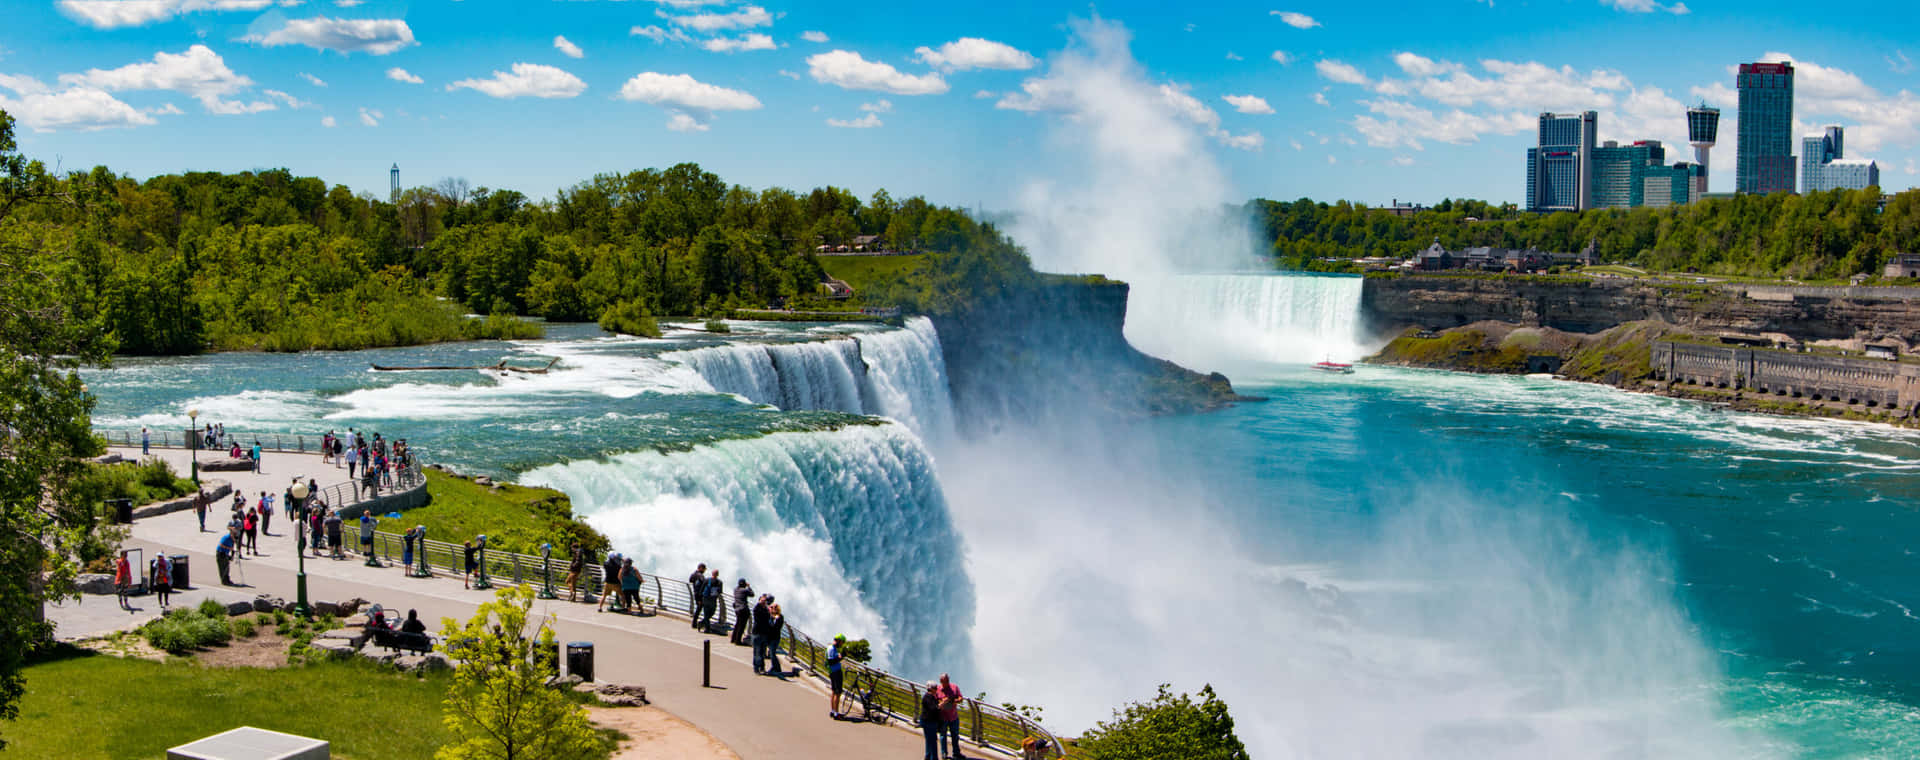 Vistaaerea Delle Cascate Del Niagara In Canada Sfondo